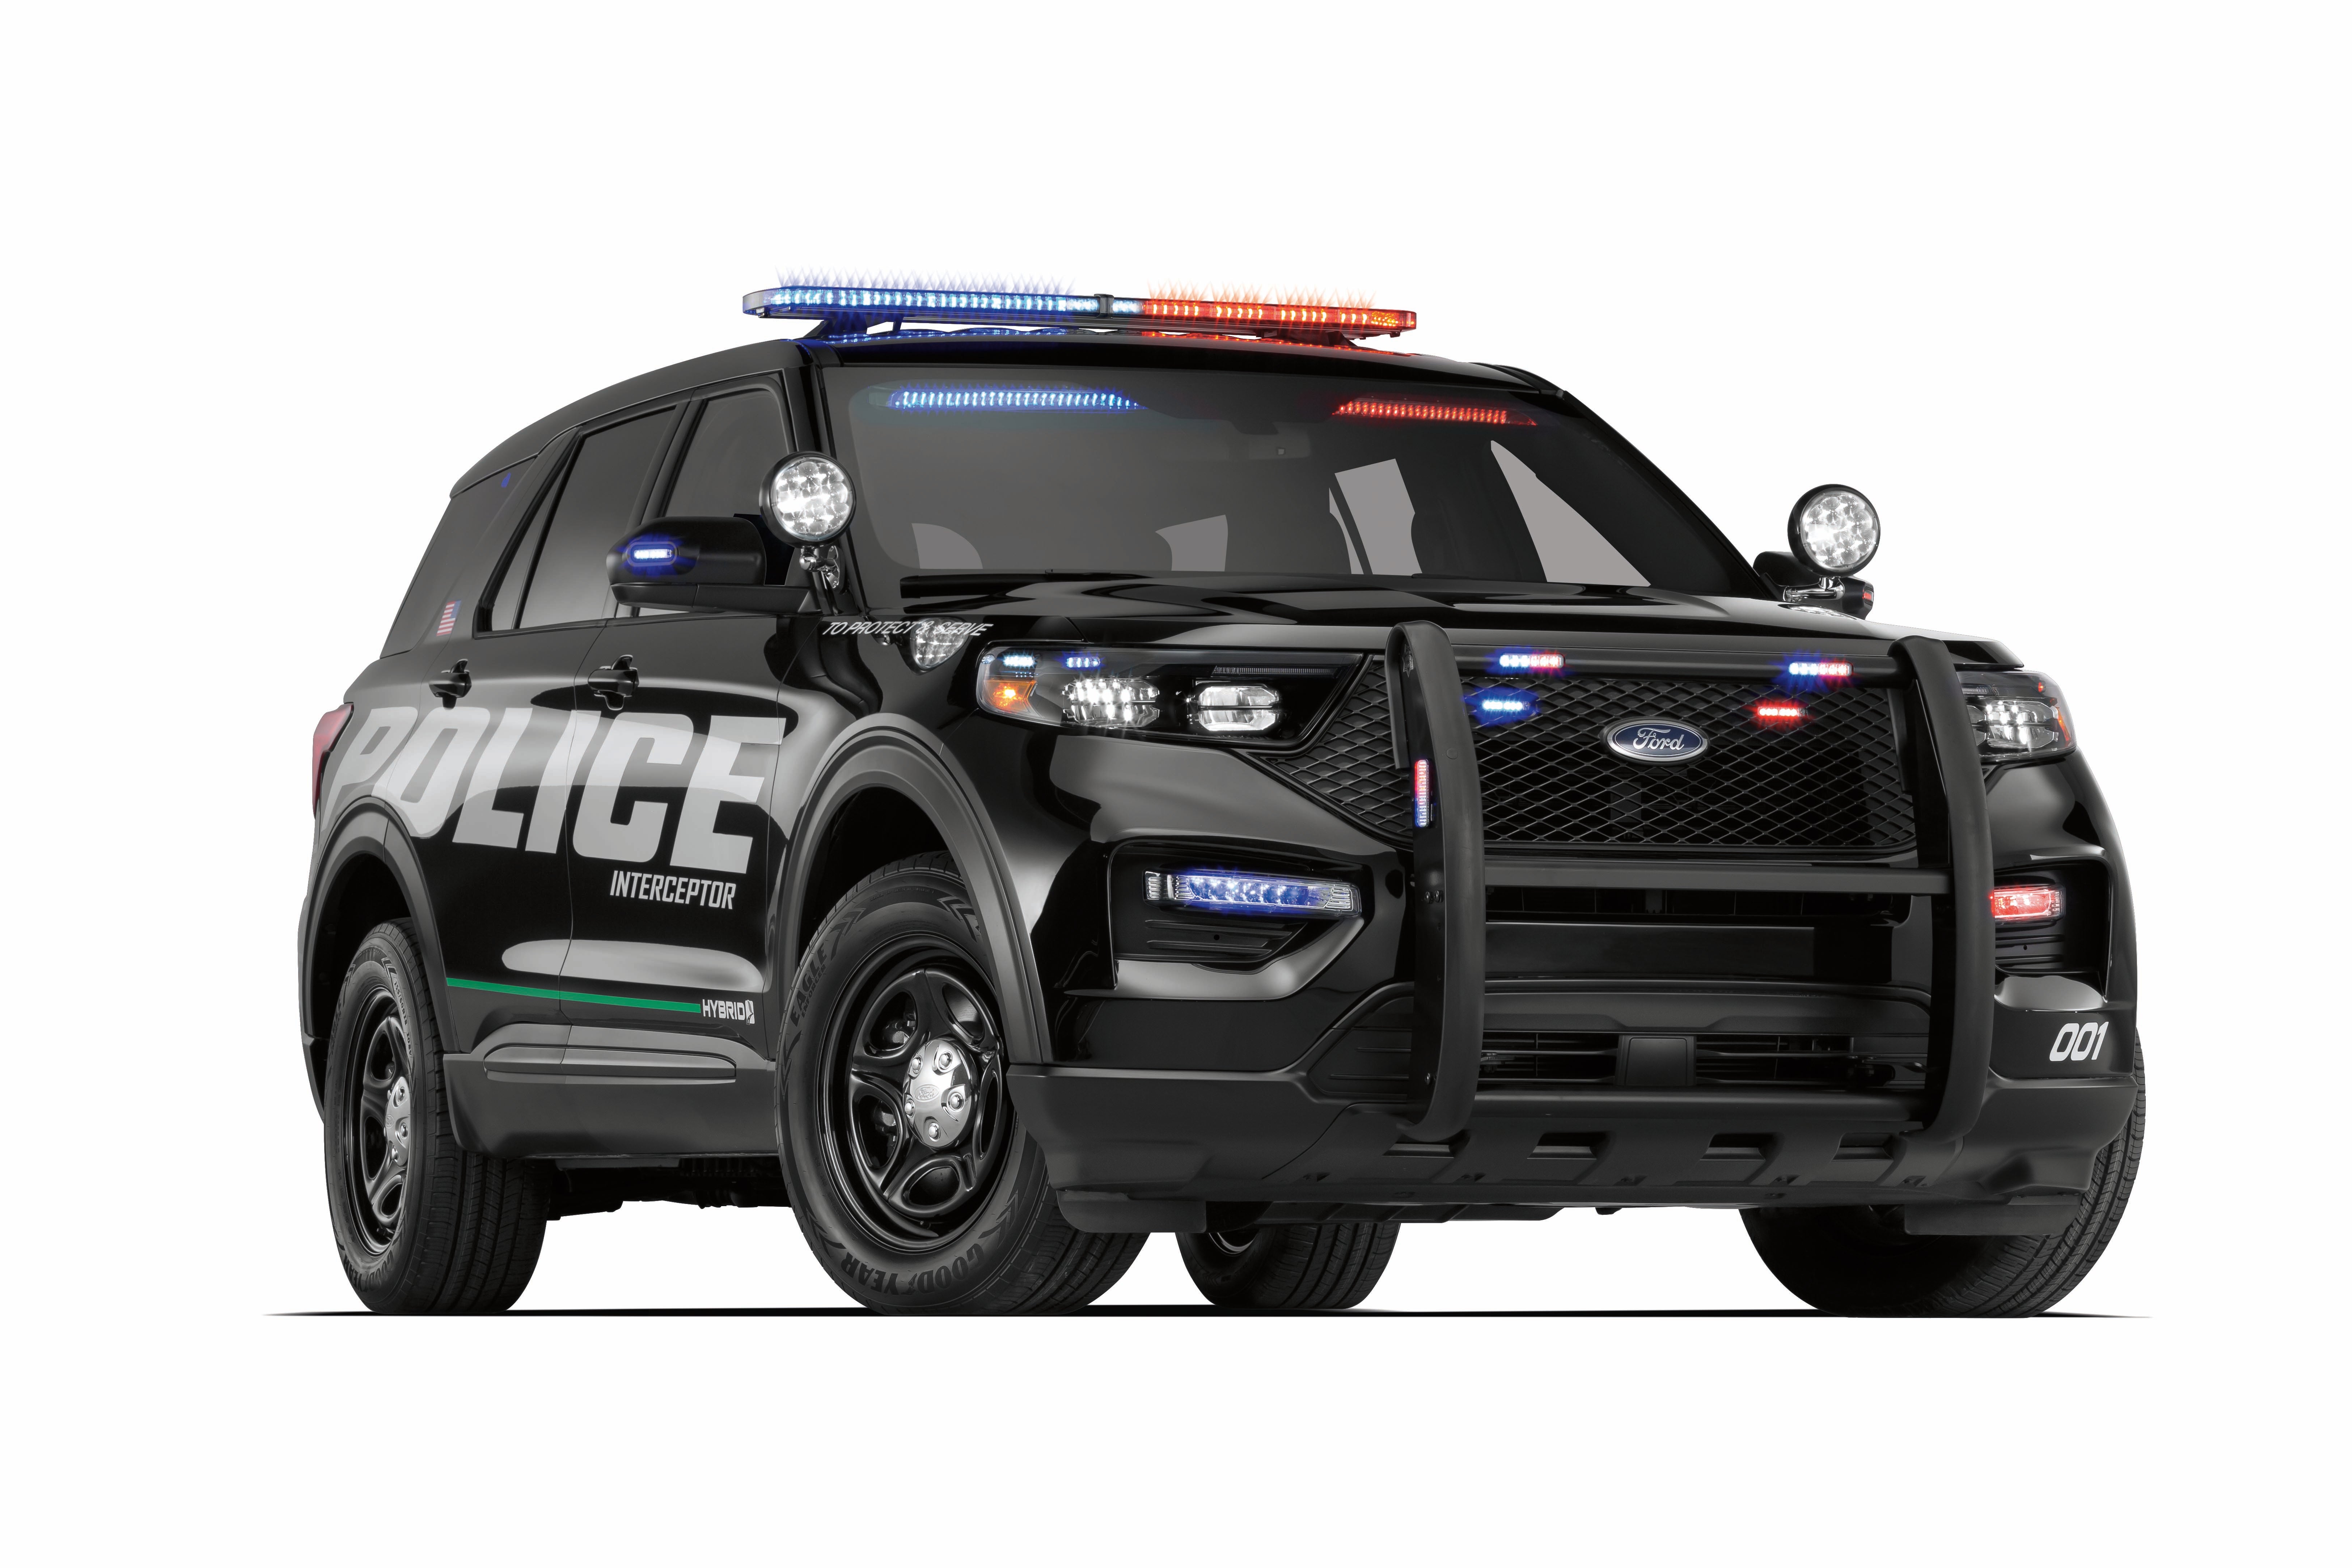 2020-ford-police-interceptor-utility-awd-fremont-ford-sheridan-wy